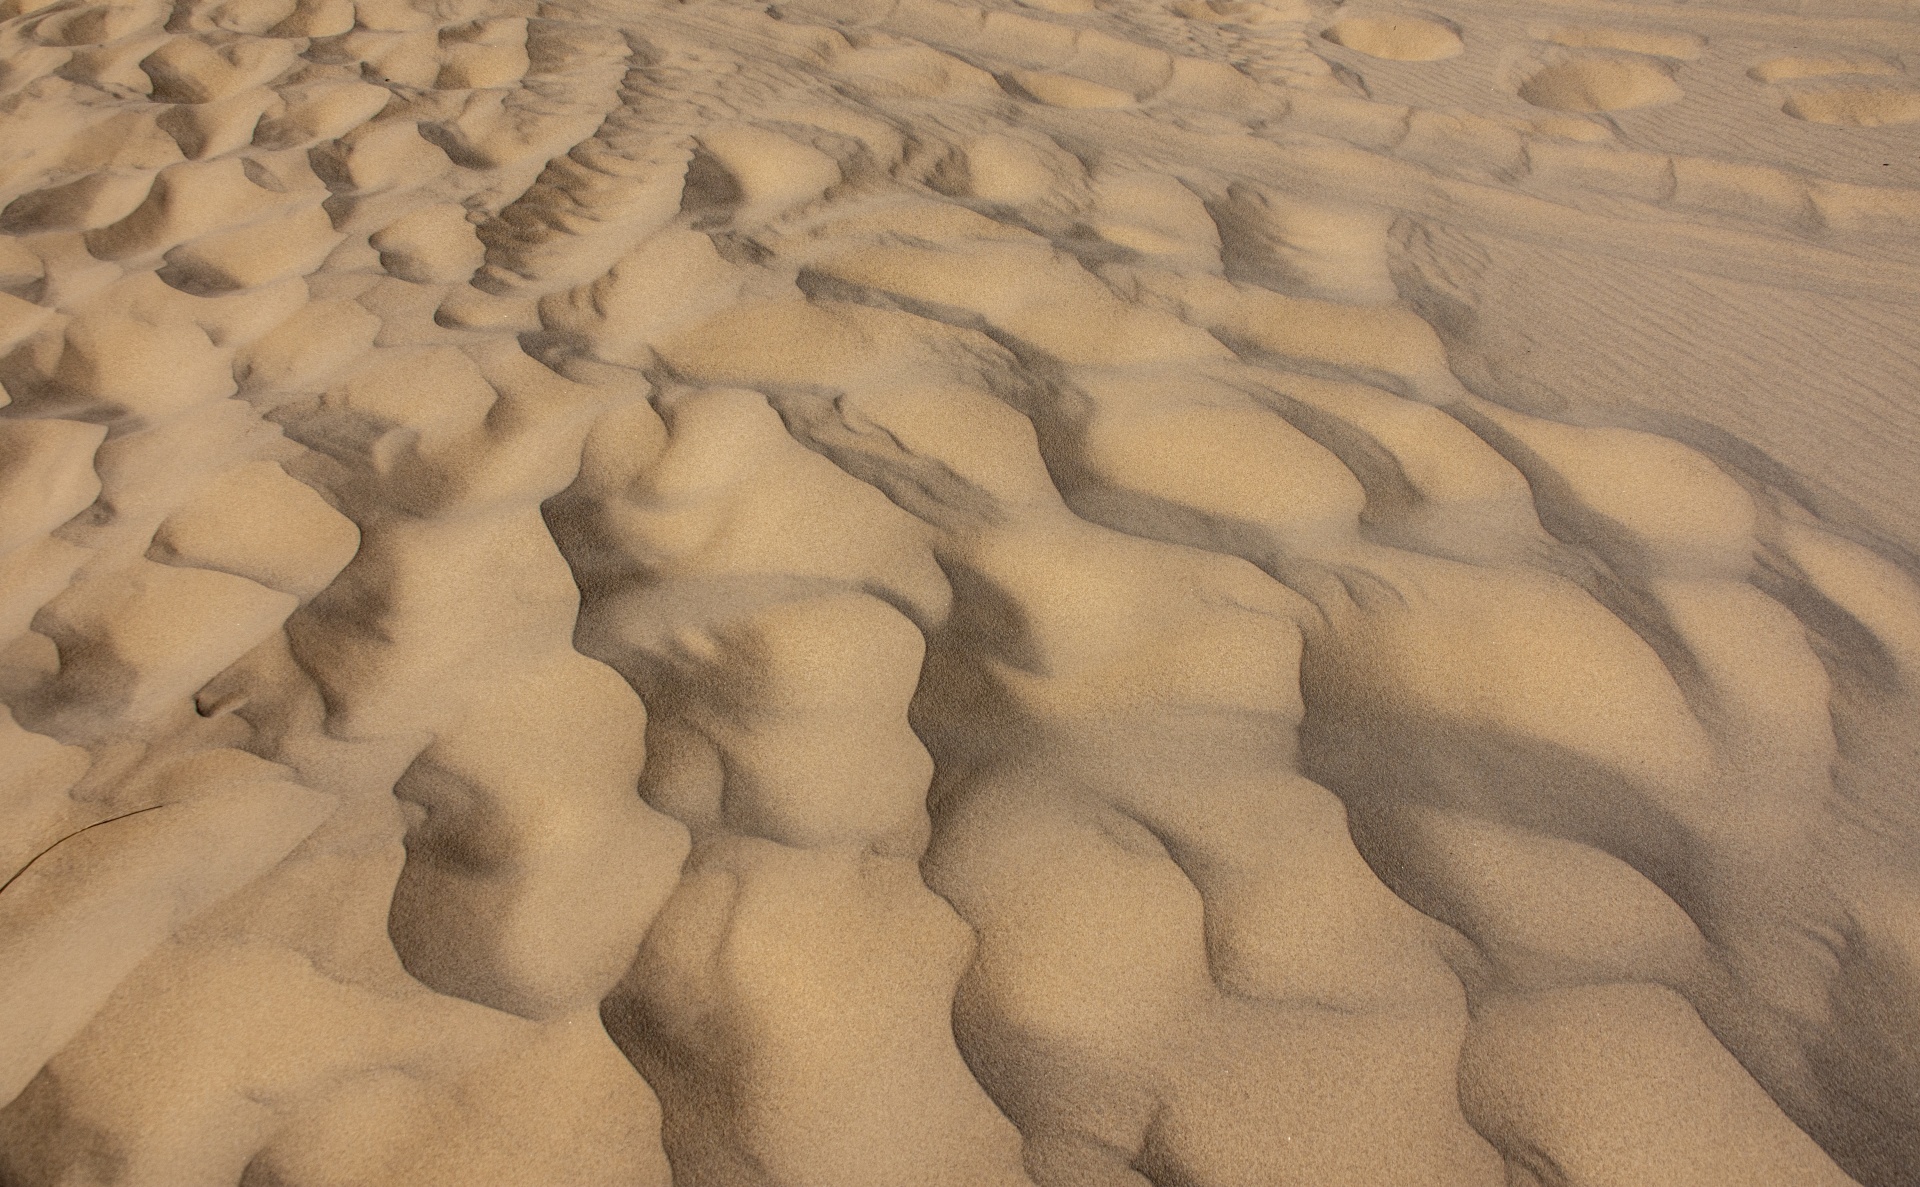 Sand Dune Texture Background